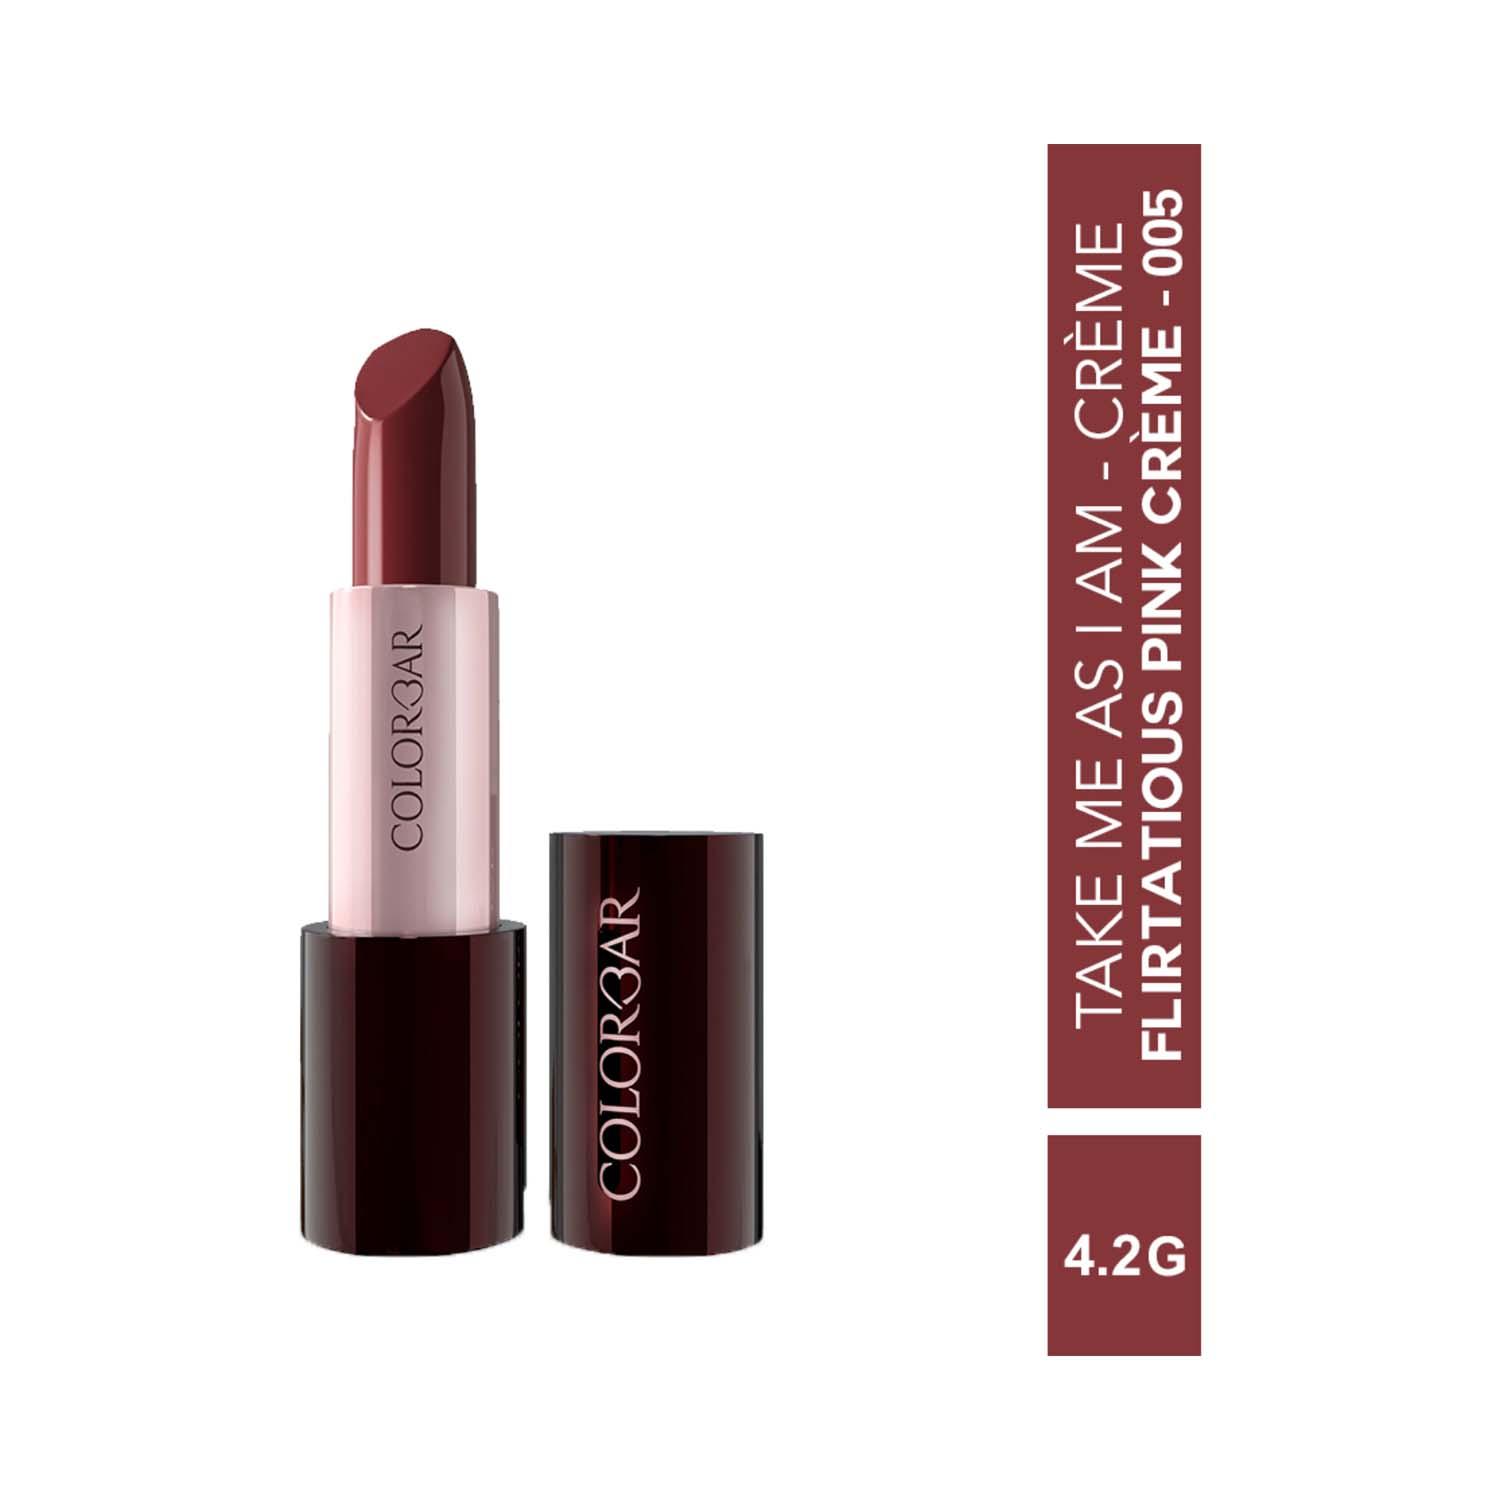 Colorbar | Colorbar Take Me As I Am Vegan Creme Lipstick - Flirtatious Pink Creme - [005] (4.2 g)